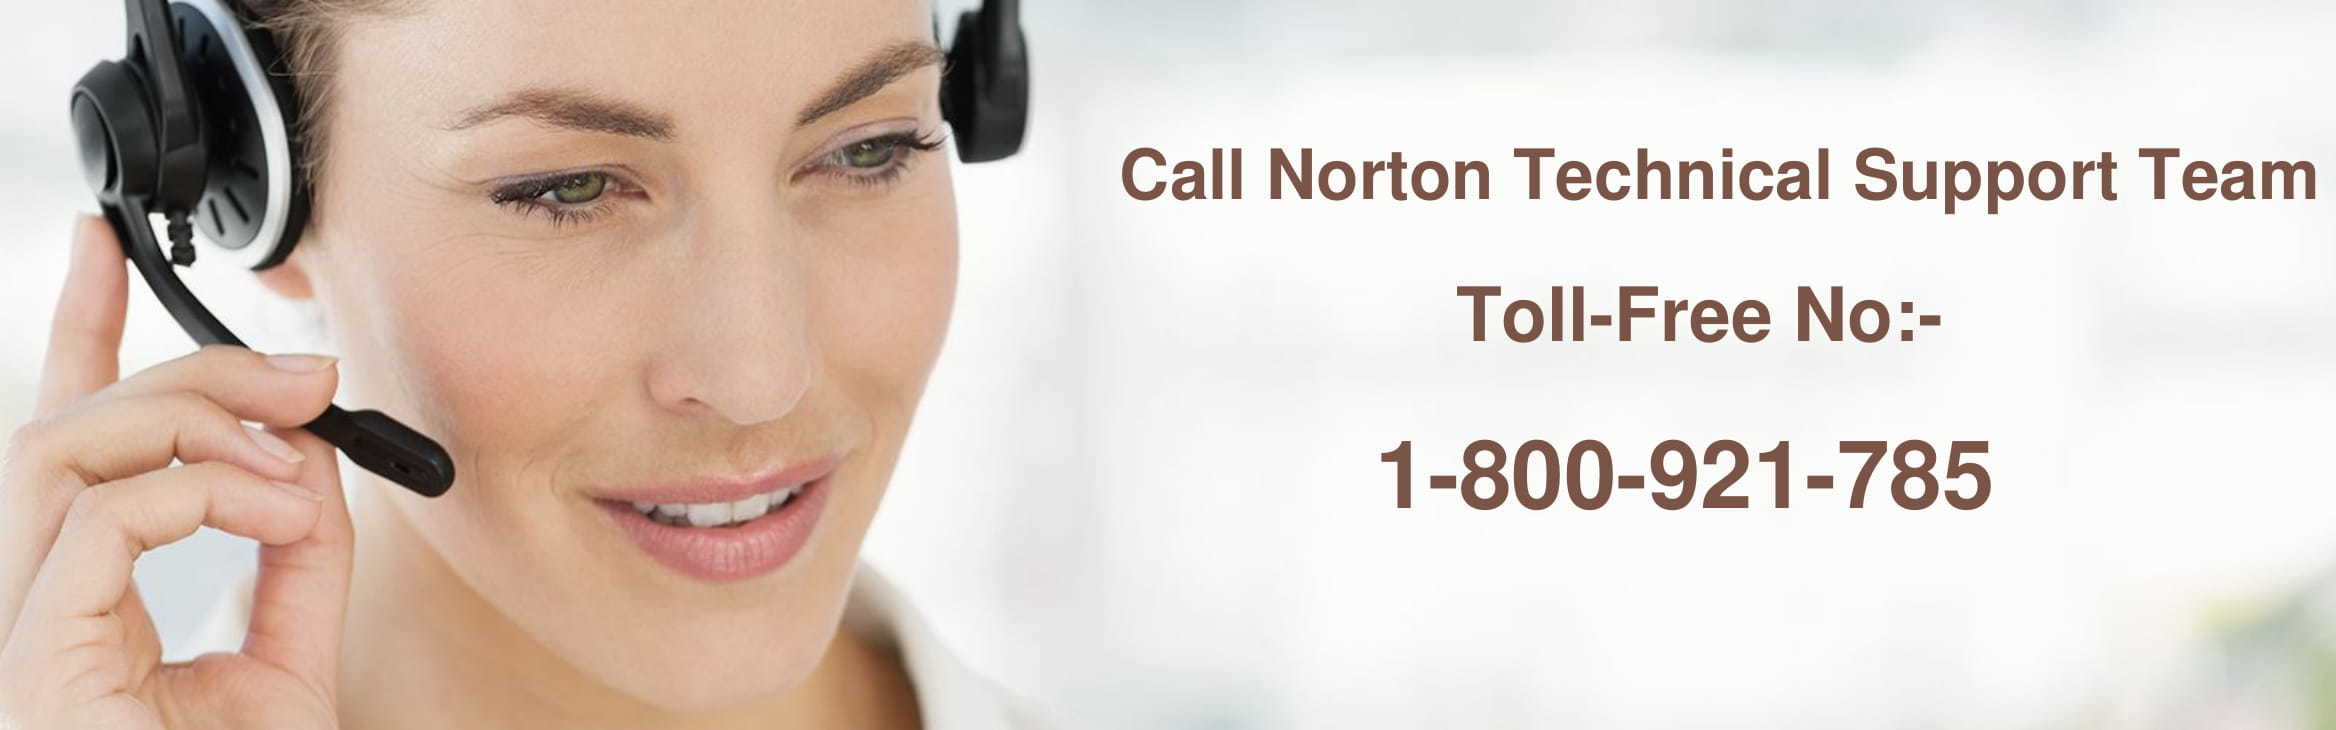 Get immense support for Norton Antivirus. 1-800-921-785 Call- 